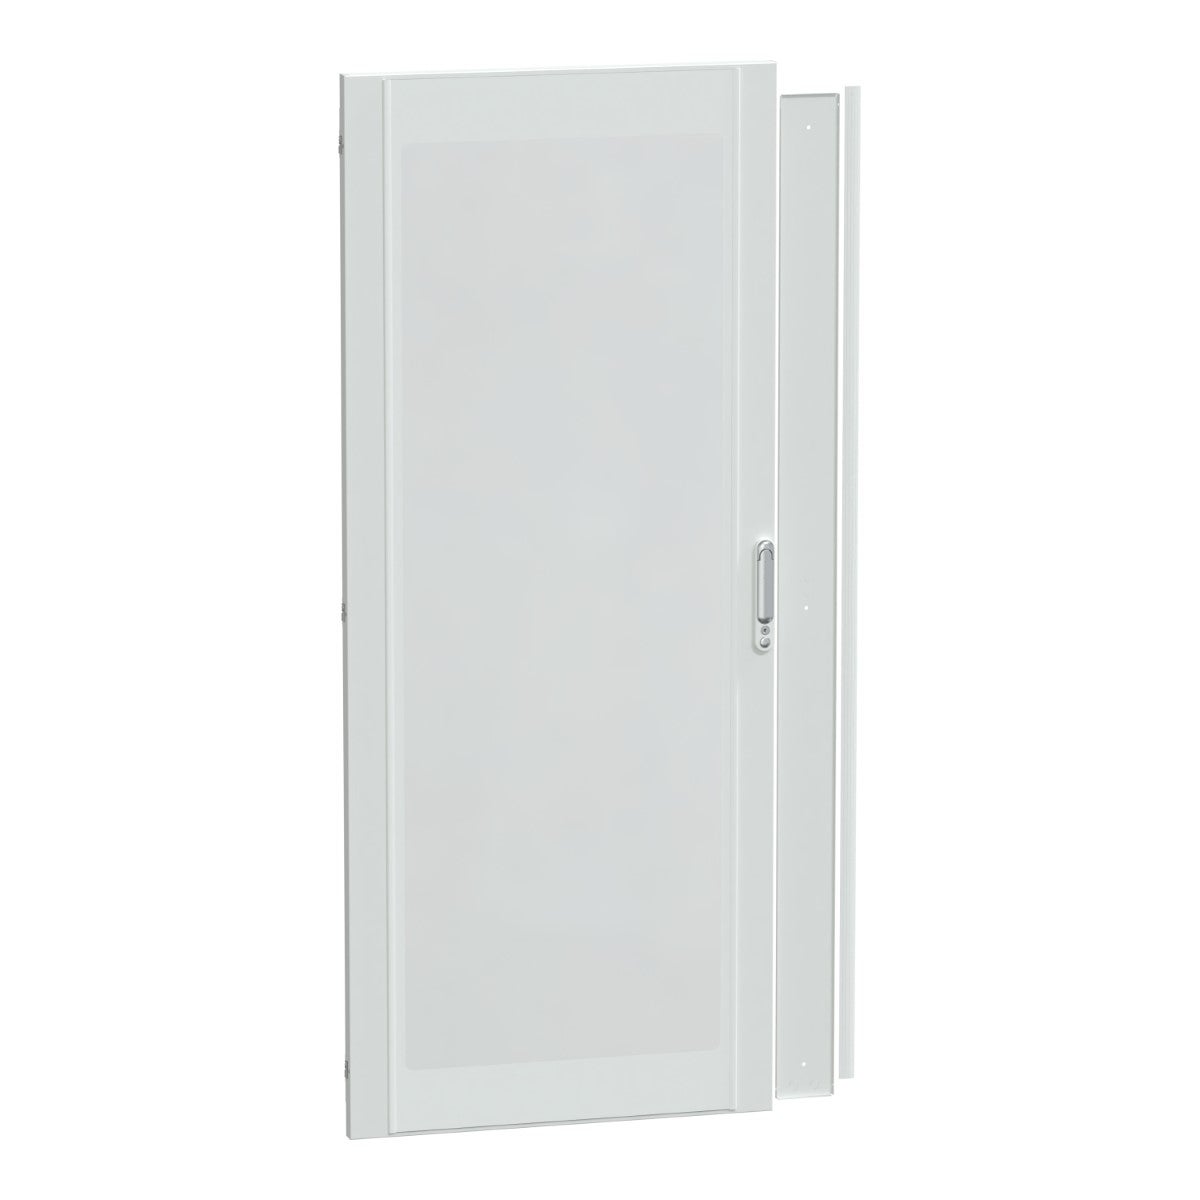 Door, PrismaSeT P, Floor-standing, transparent, reversible opening, 36M, W800, 2 locks, IP30, white, RAL 9003